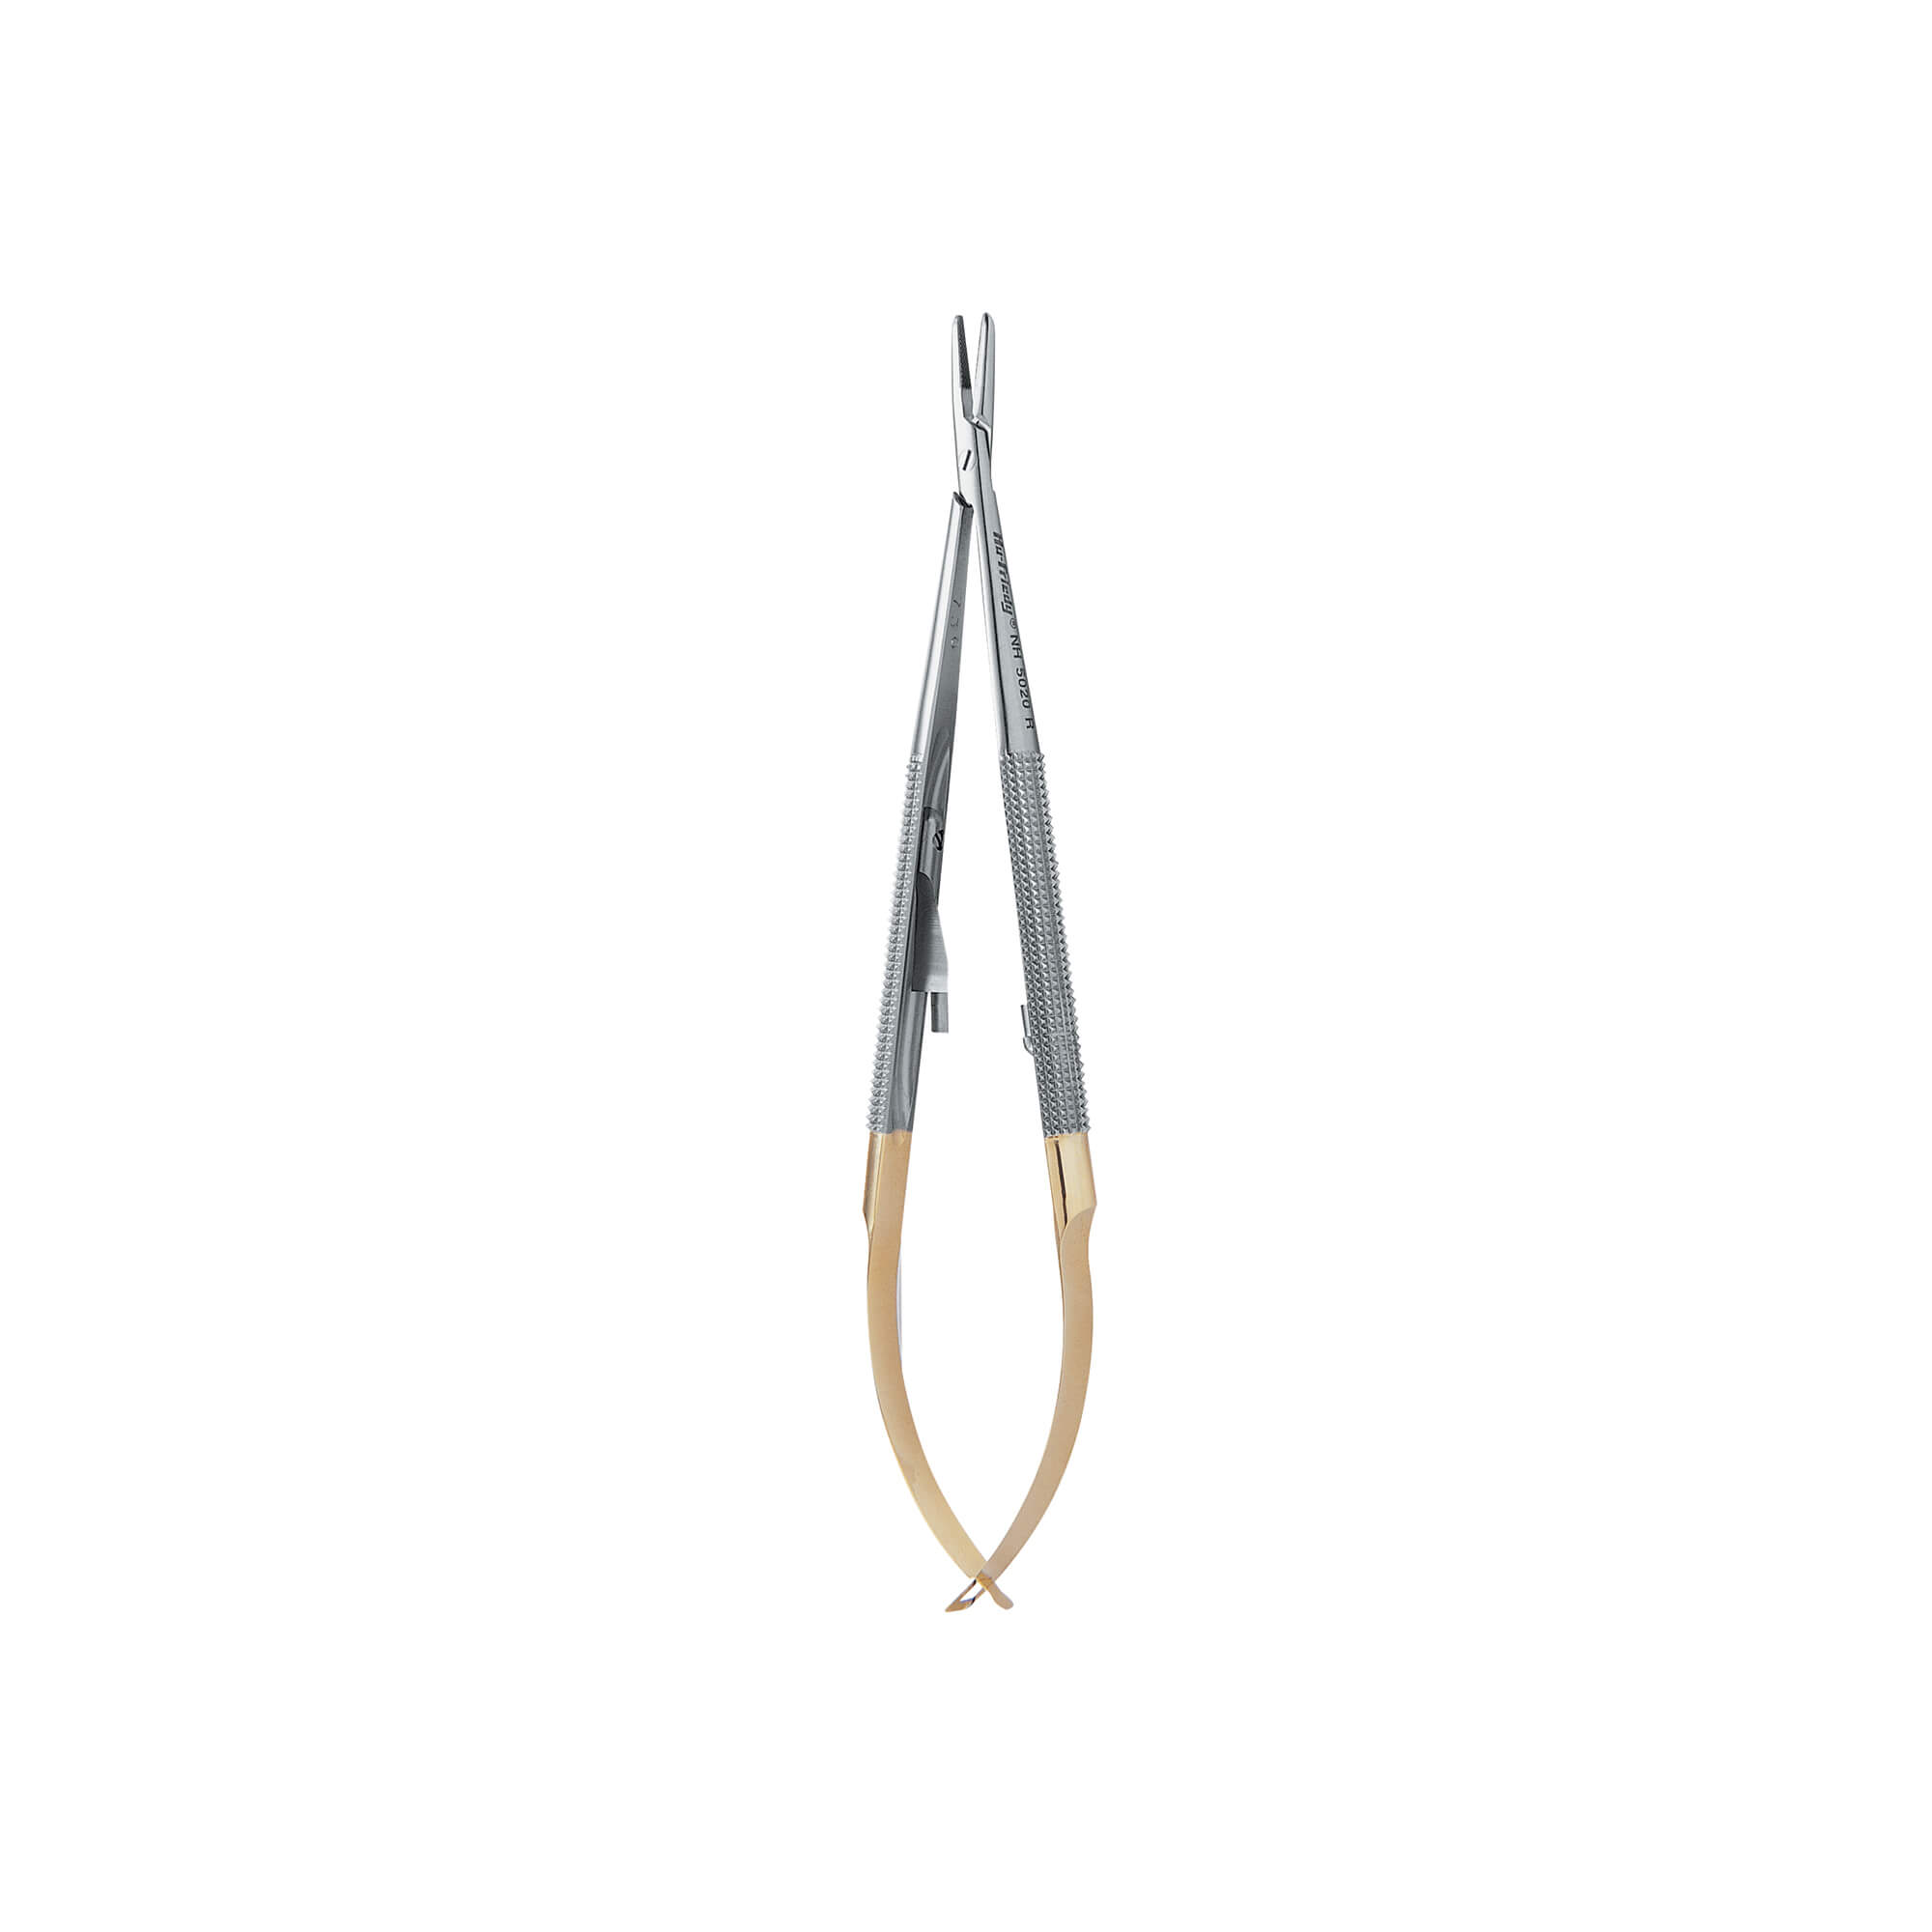 Finochietto Needle Holder, 8” (20cm), CVD Tips